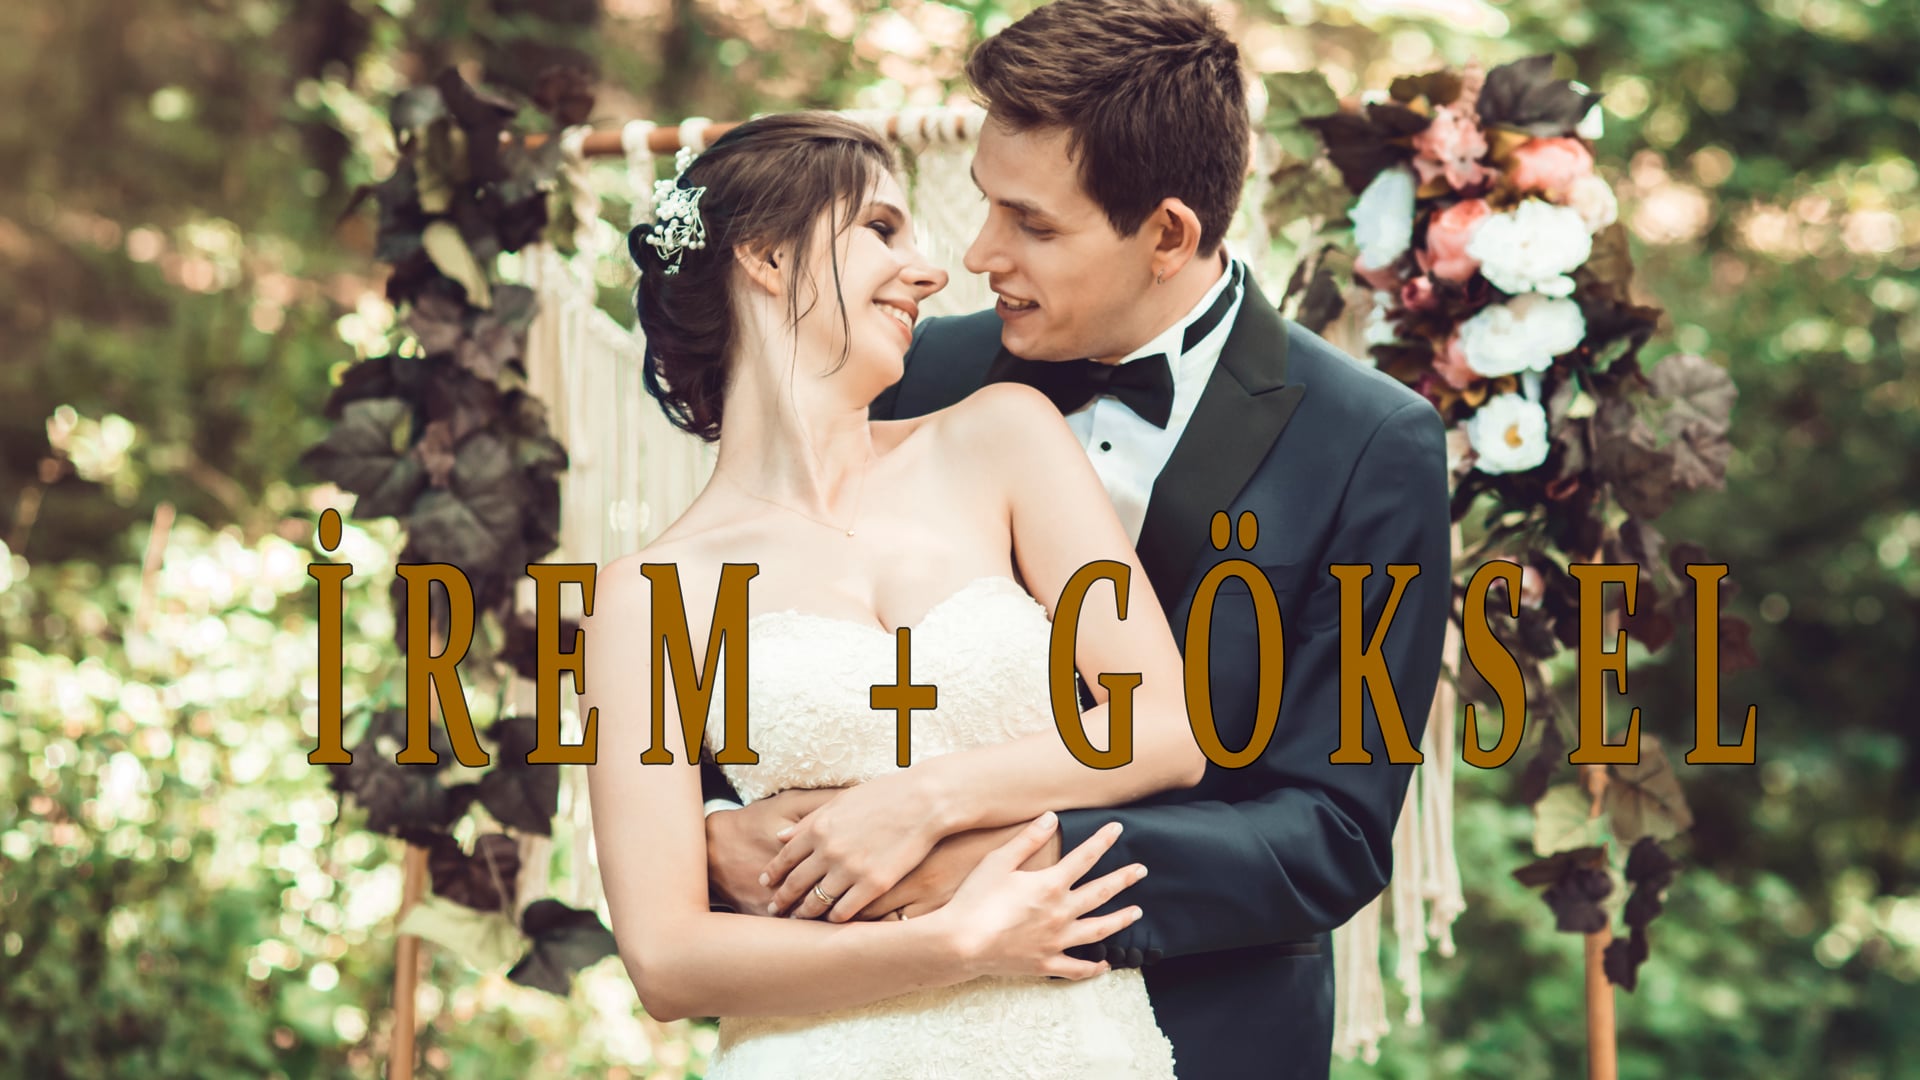 İrem+Göksel wedding İstanbul | Turkey